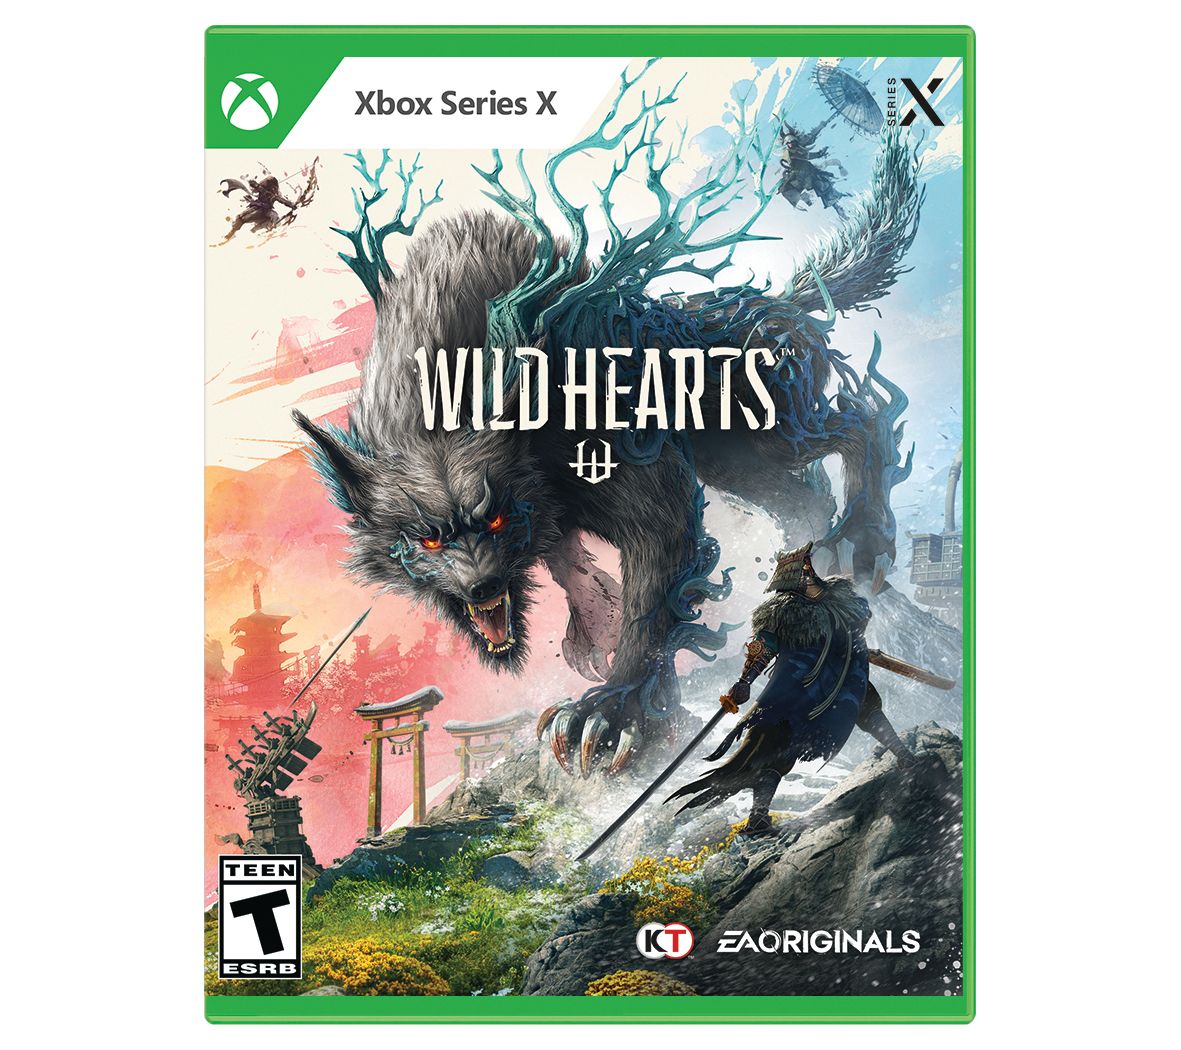 WILD HEARTS - Teste no Xbox Series S 